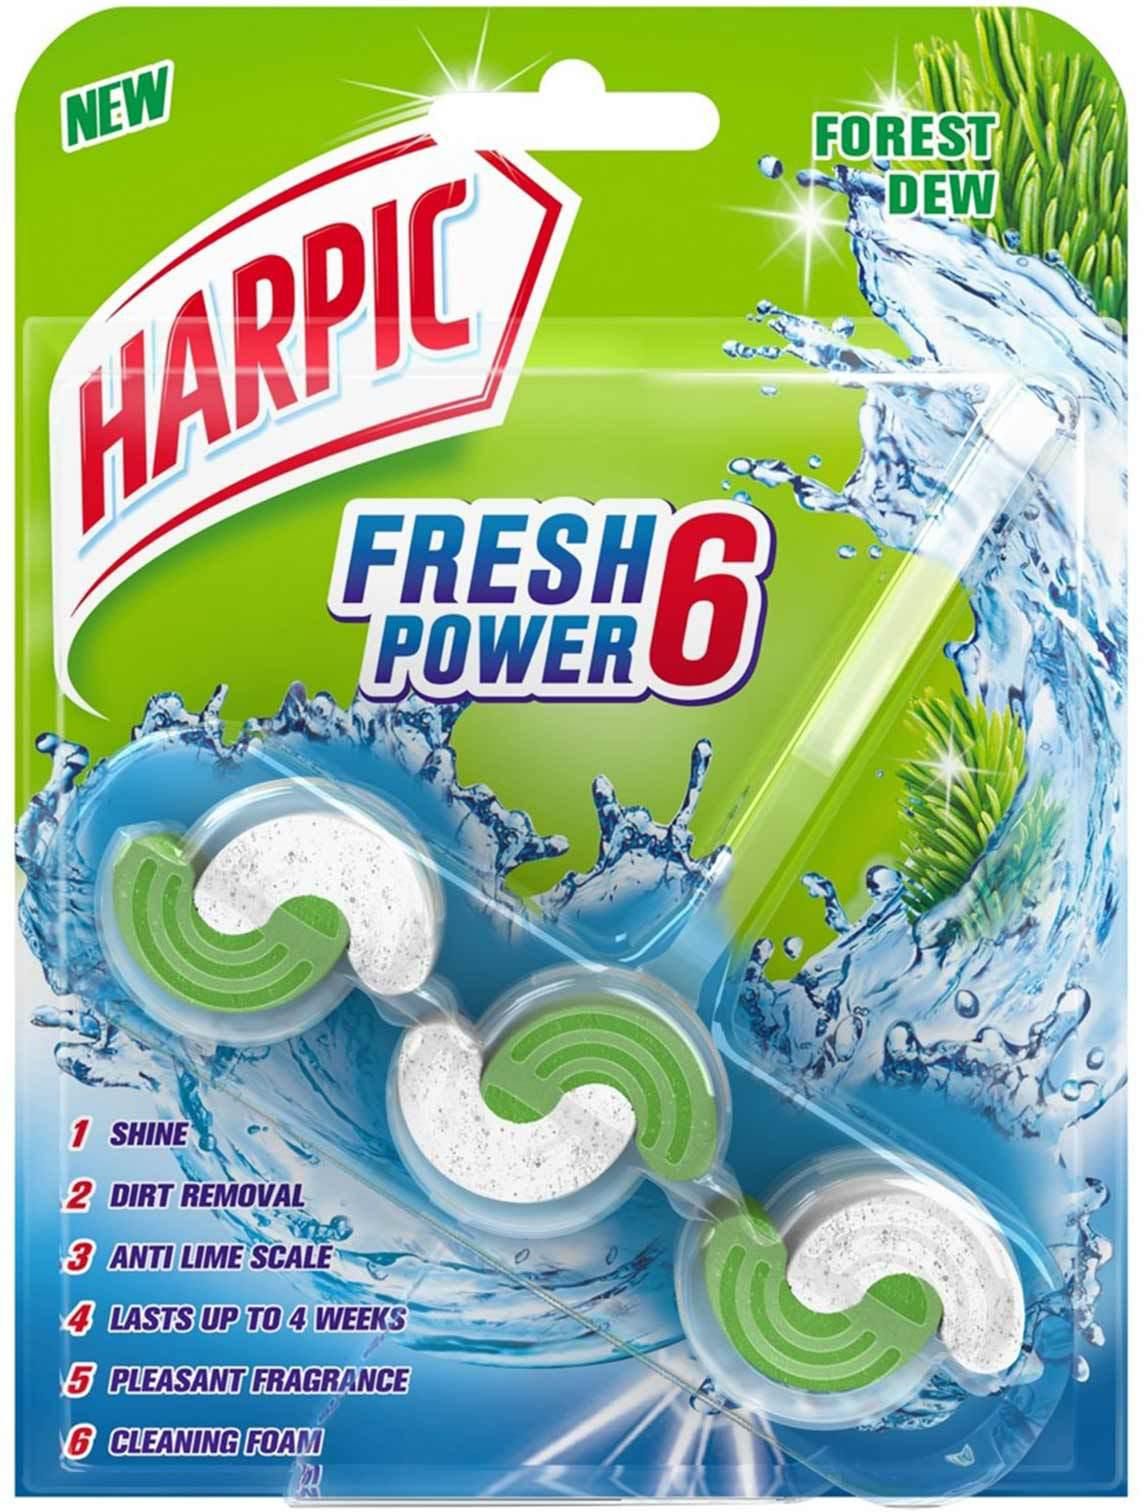 Harpic fresh power 6 toilet cleaner forest dew 35 g x 2 pieces